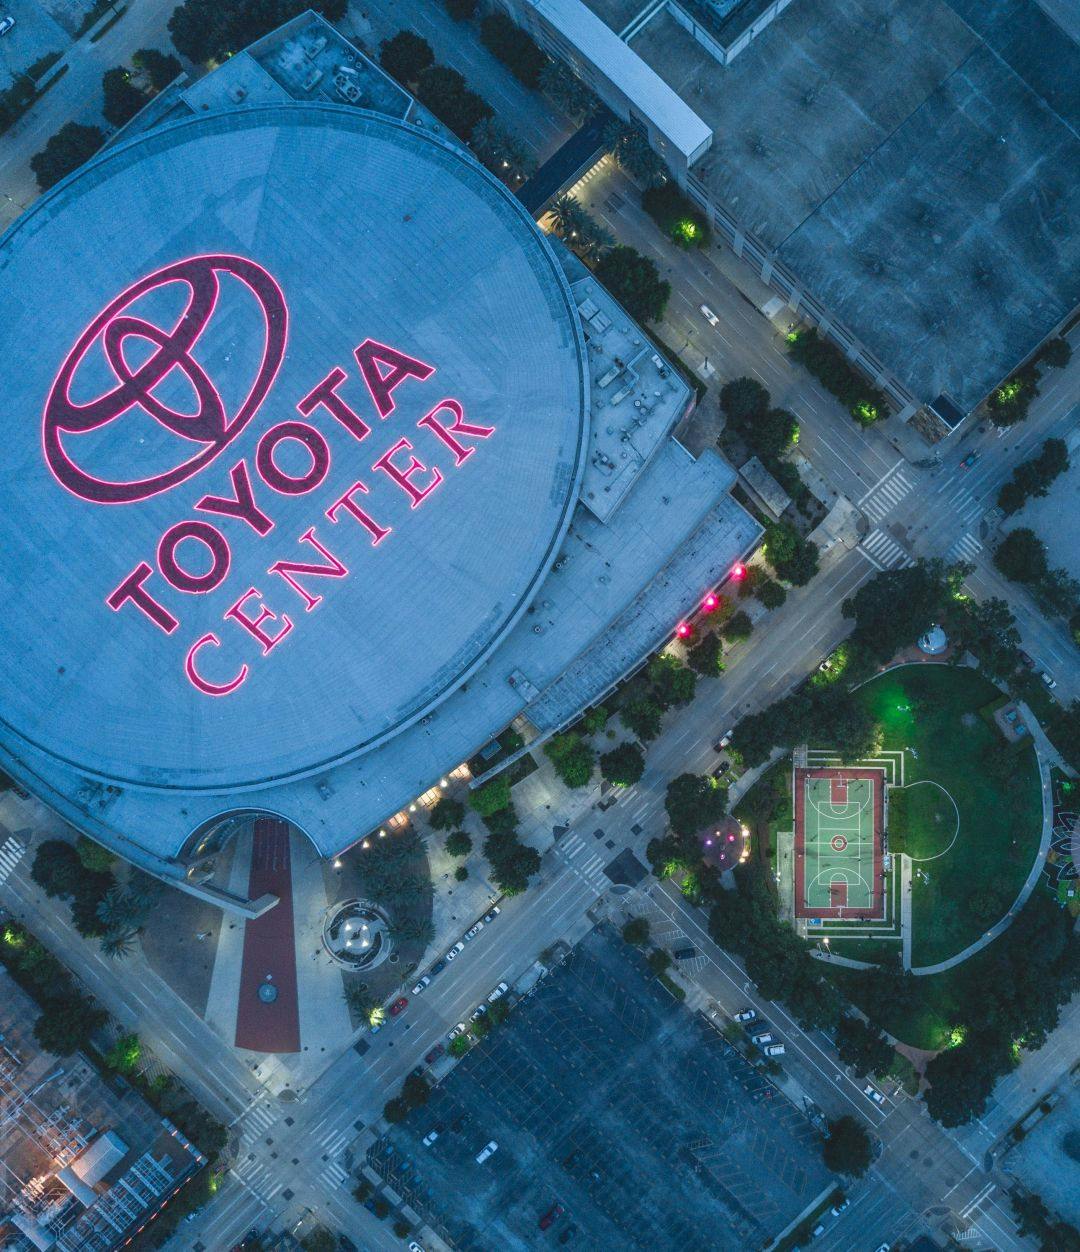 The Toyota center stadium in Houston